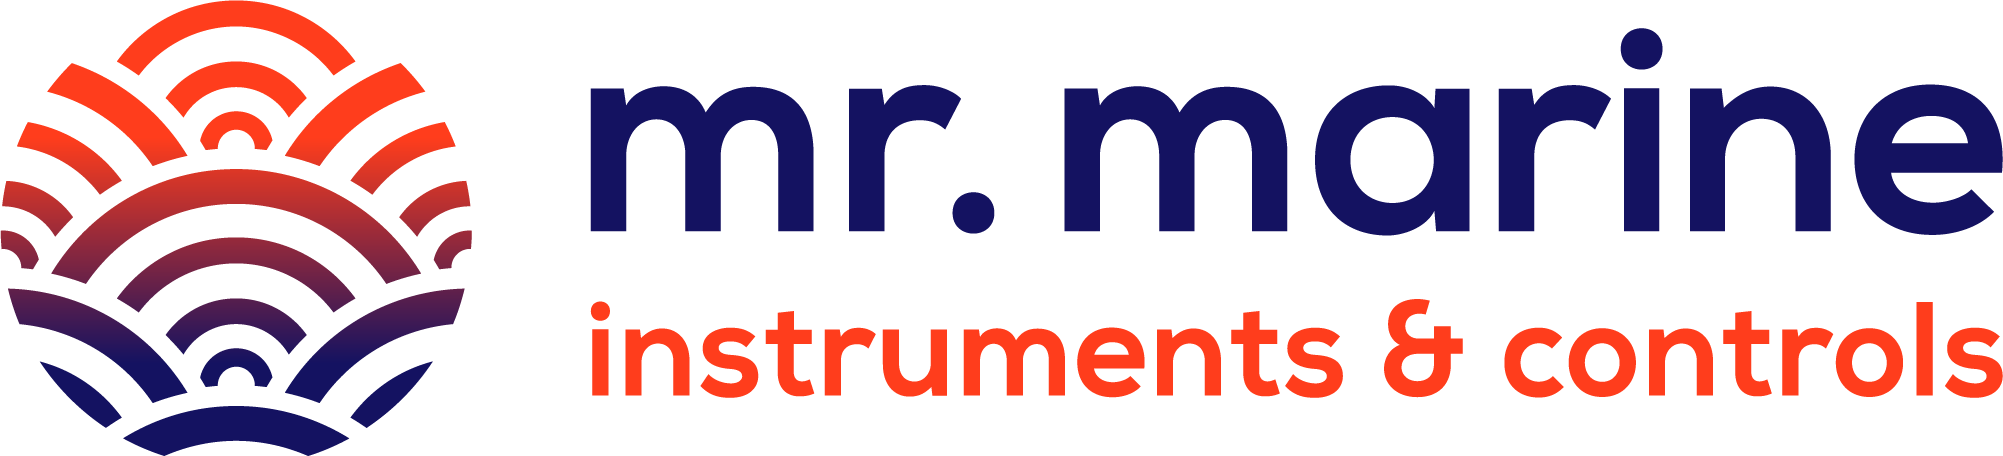 Mr. Marine Instruments & Controls